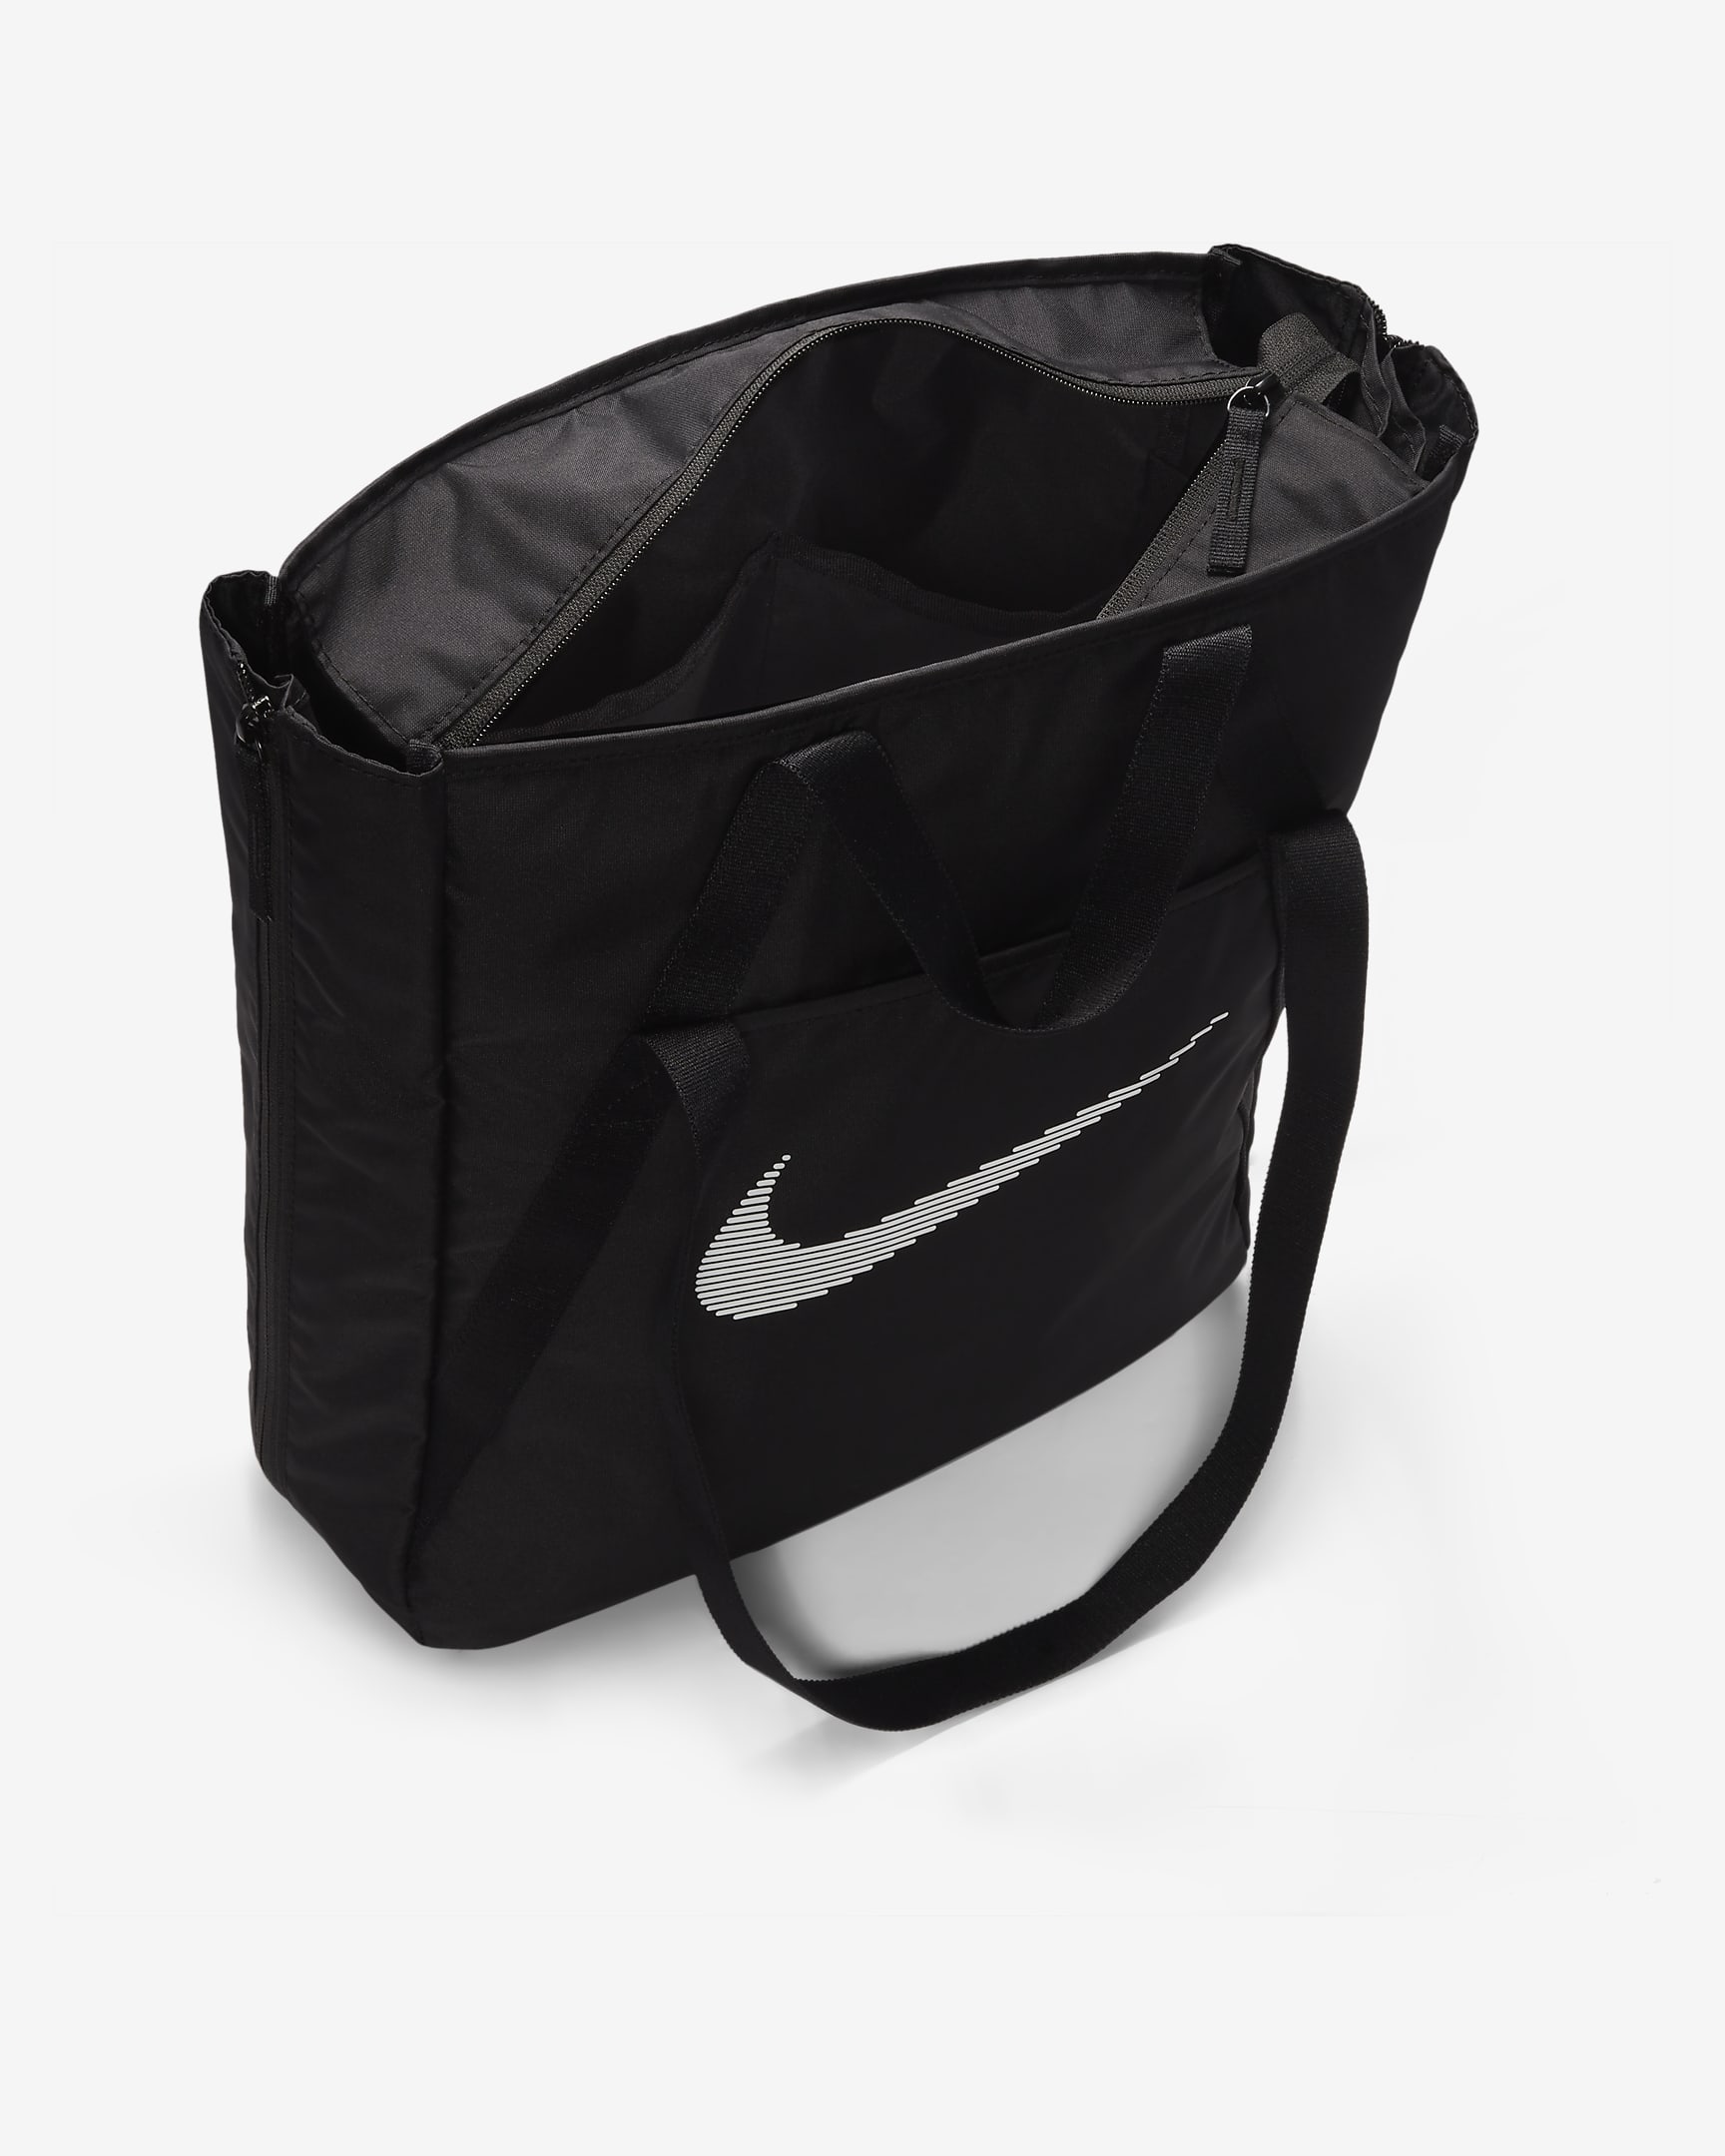 Nike Gym Tote (28L) - Black/Black/White